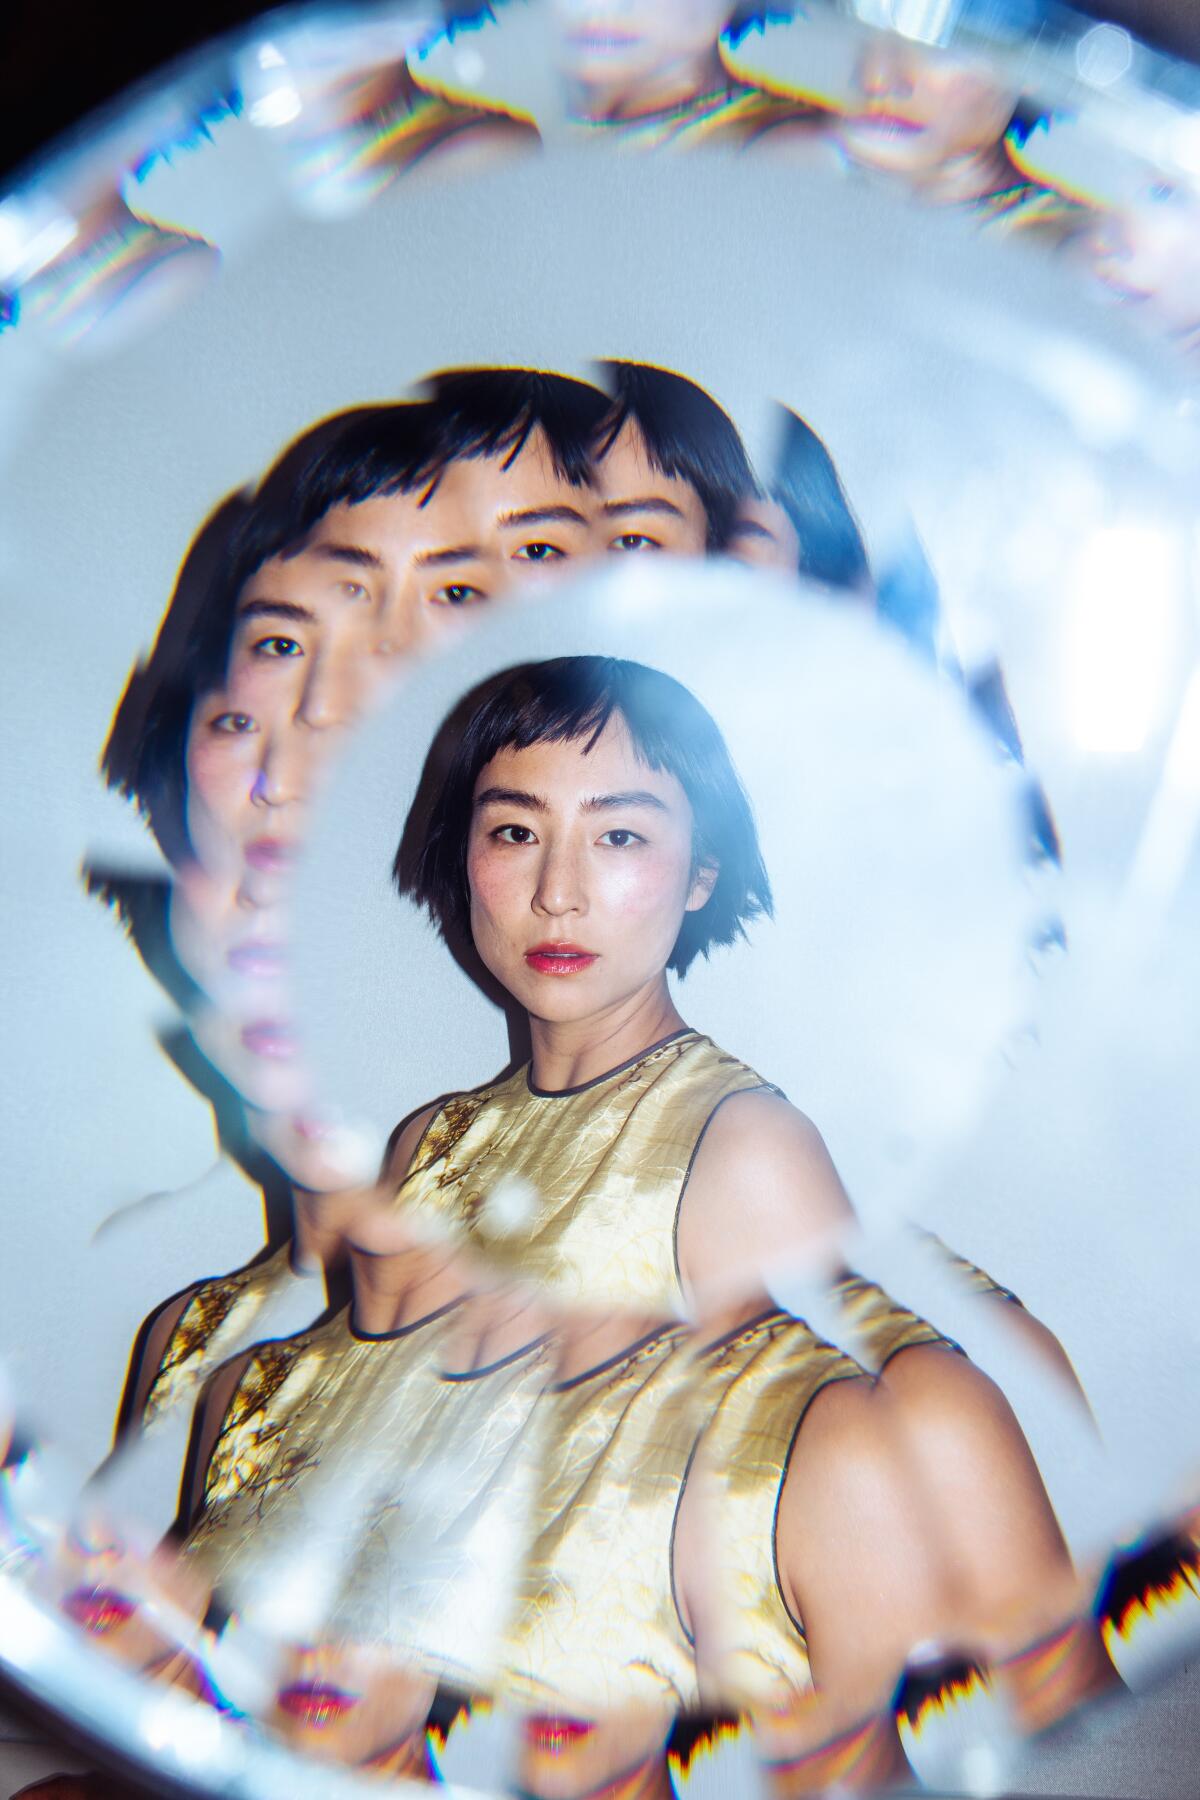 A portrait of a woman using a kaleidoscope-type filter.